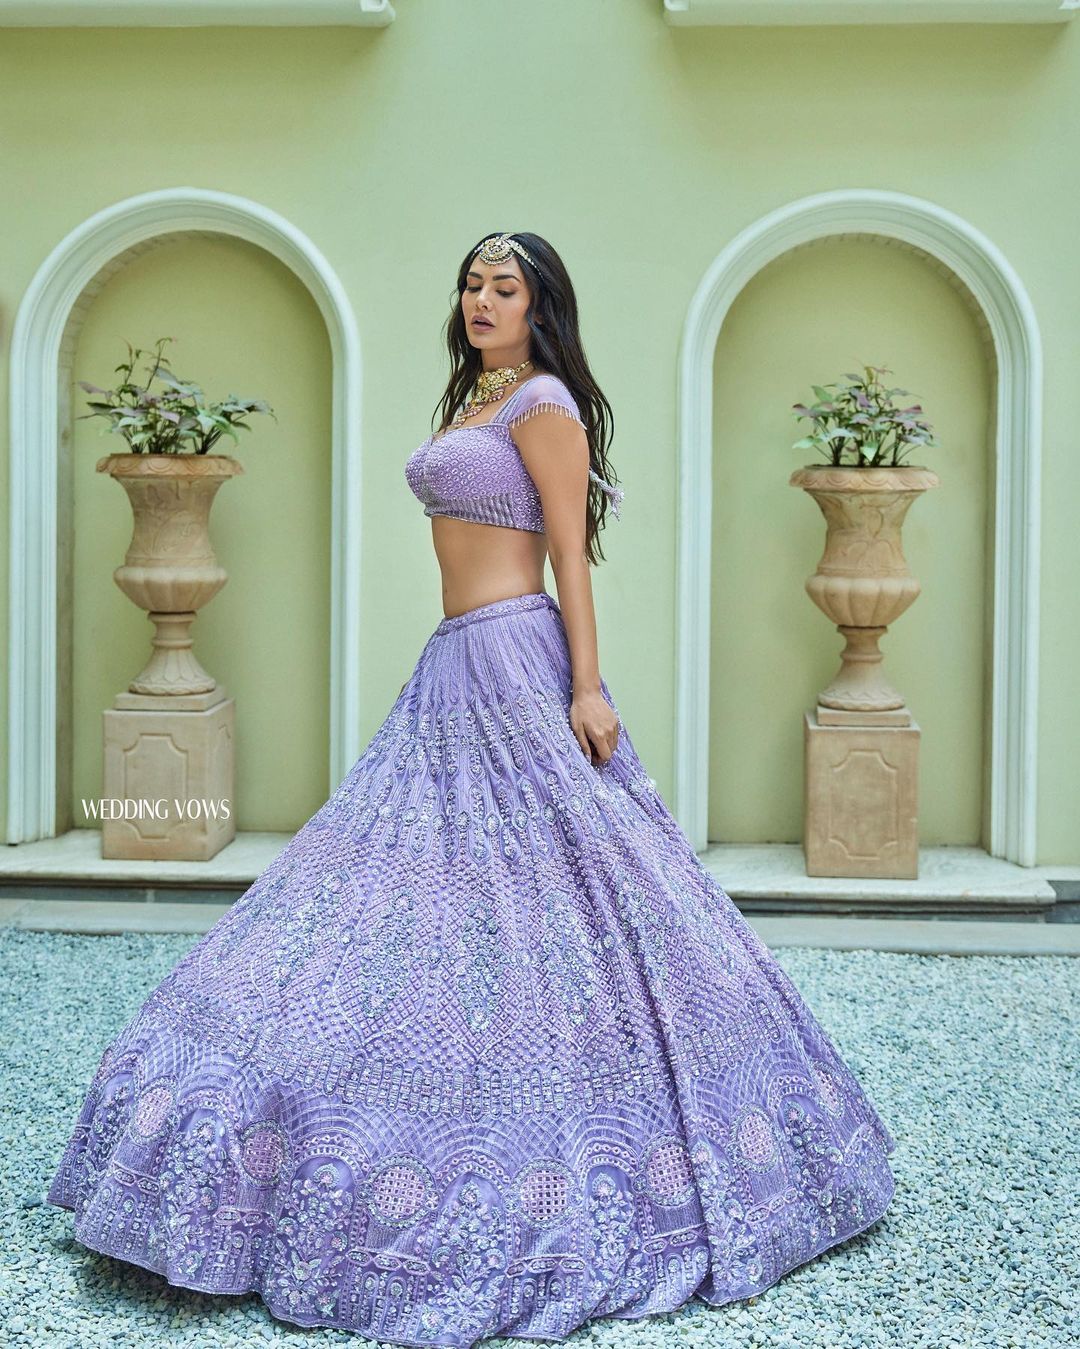 Esha Gupta's Eye-Catching Look In Purple Colored Heavy Embroidered Lehenga